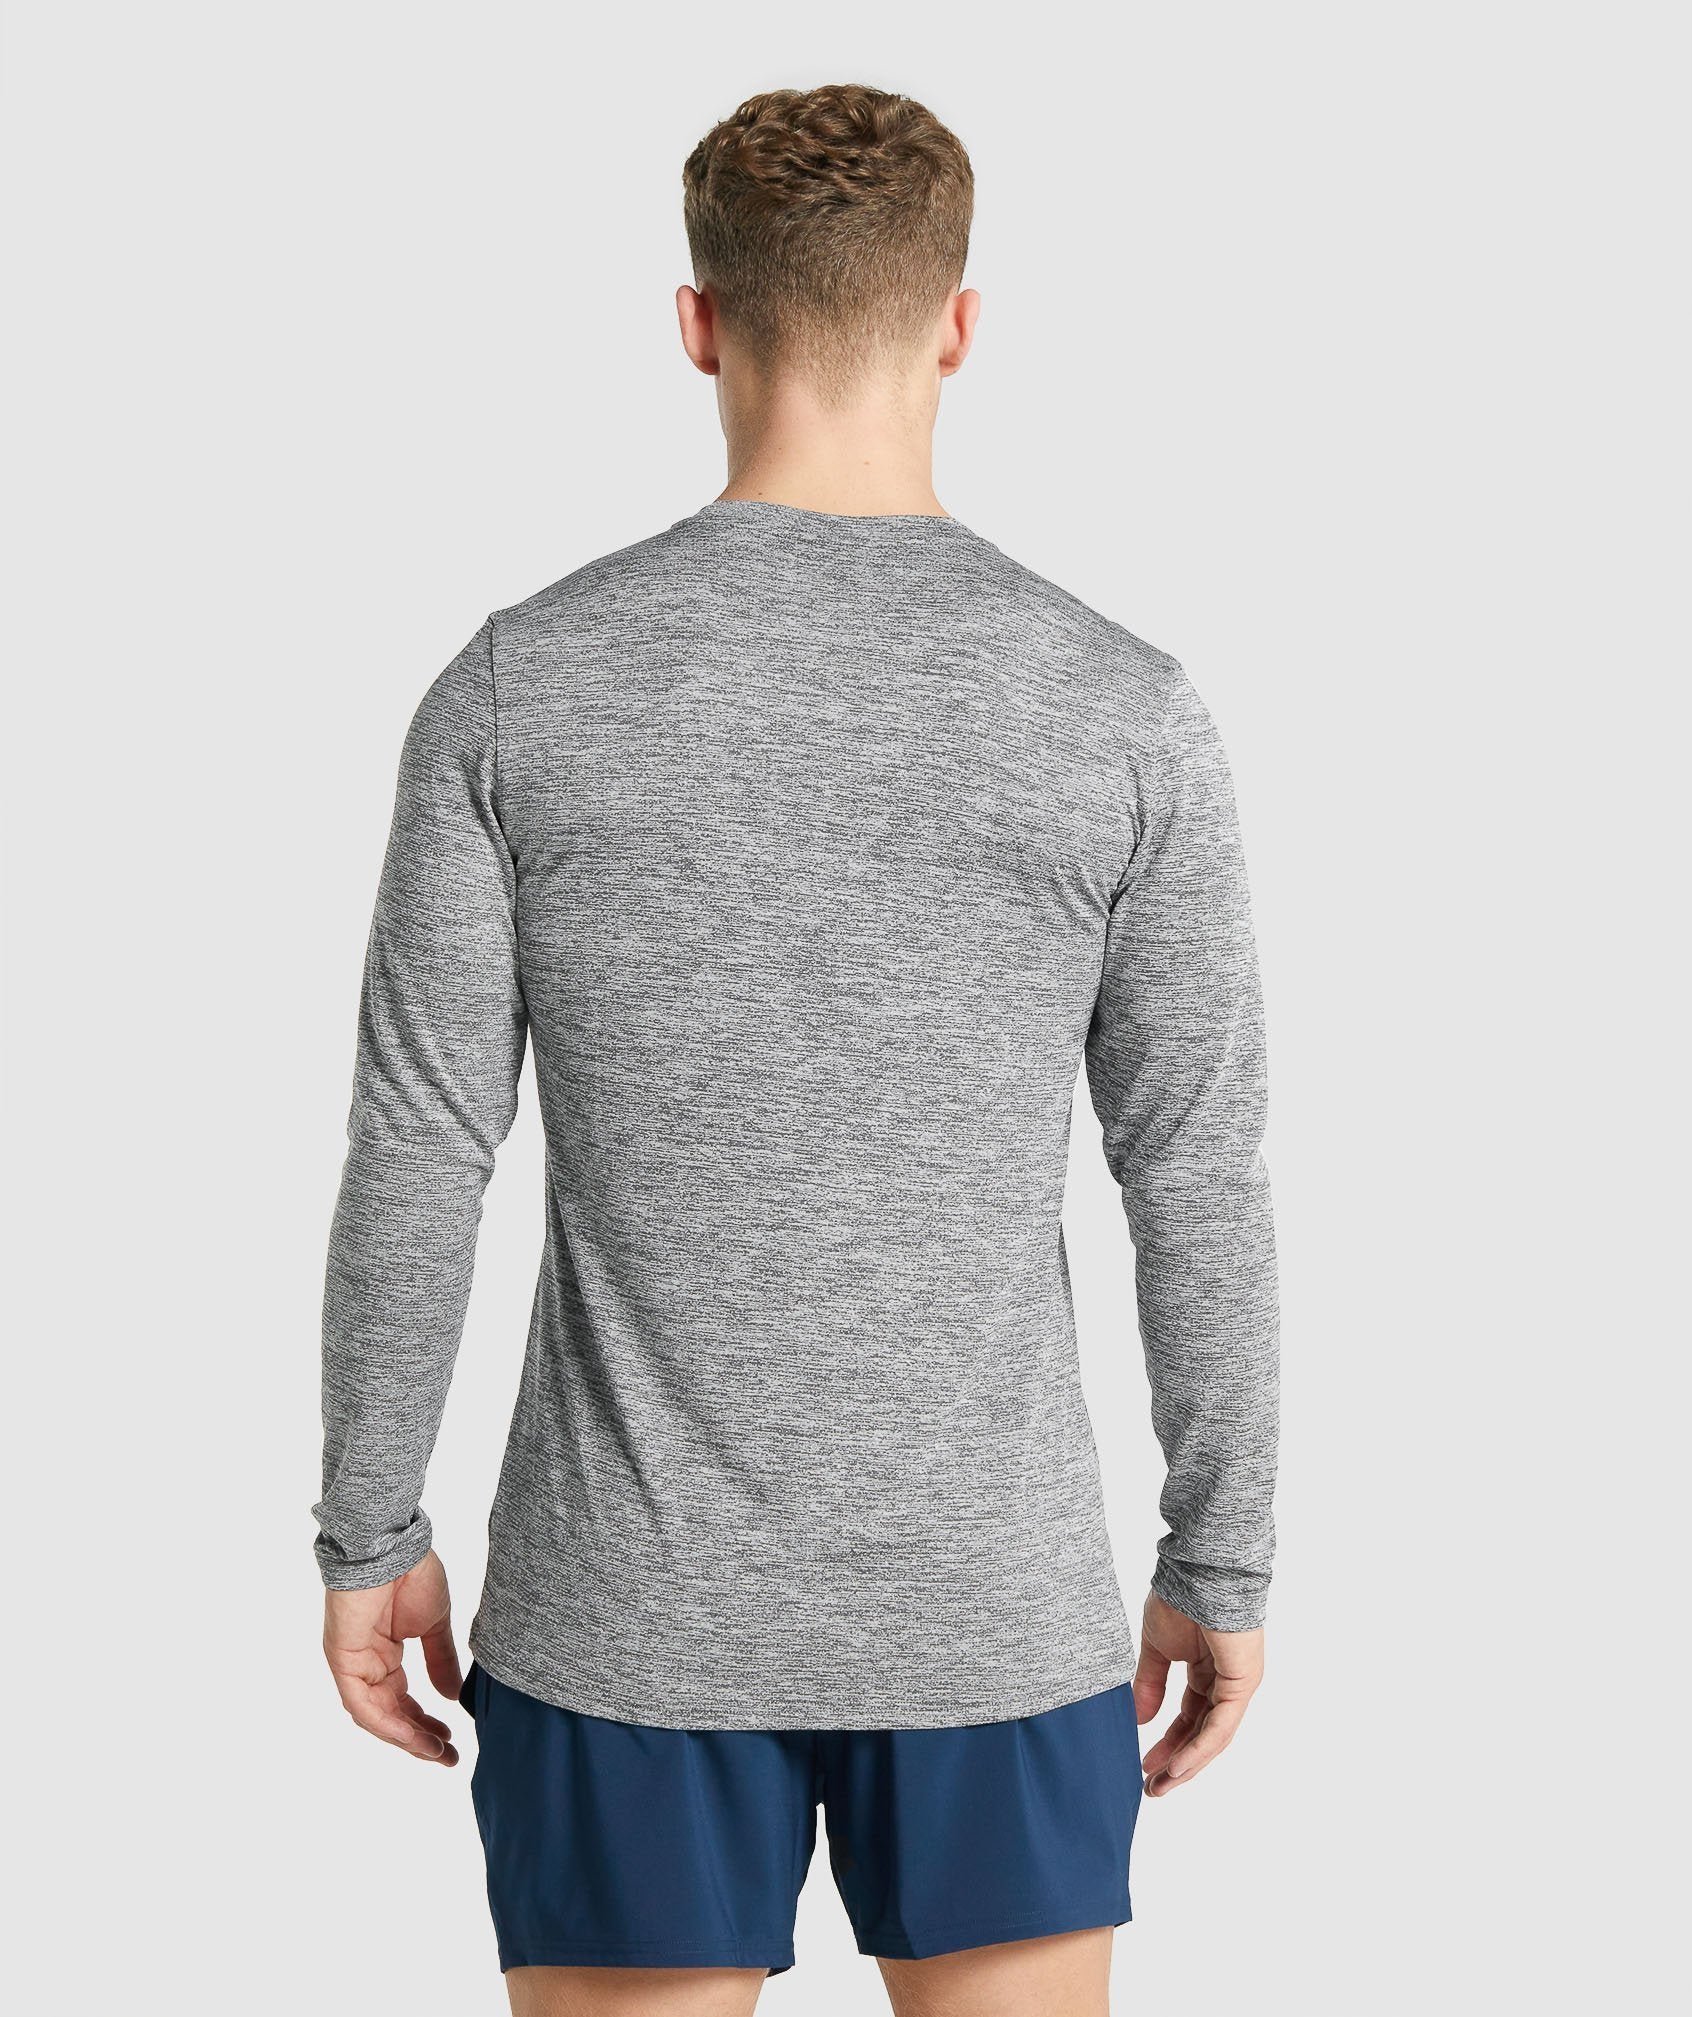 Gymshark Arrival Marl Long Sleeve T-shirts Herren Grau | 7845263-GK